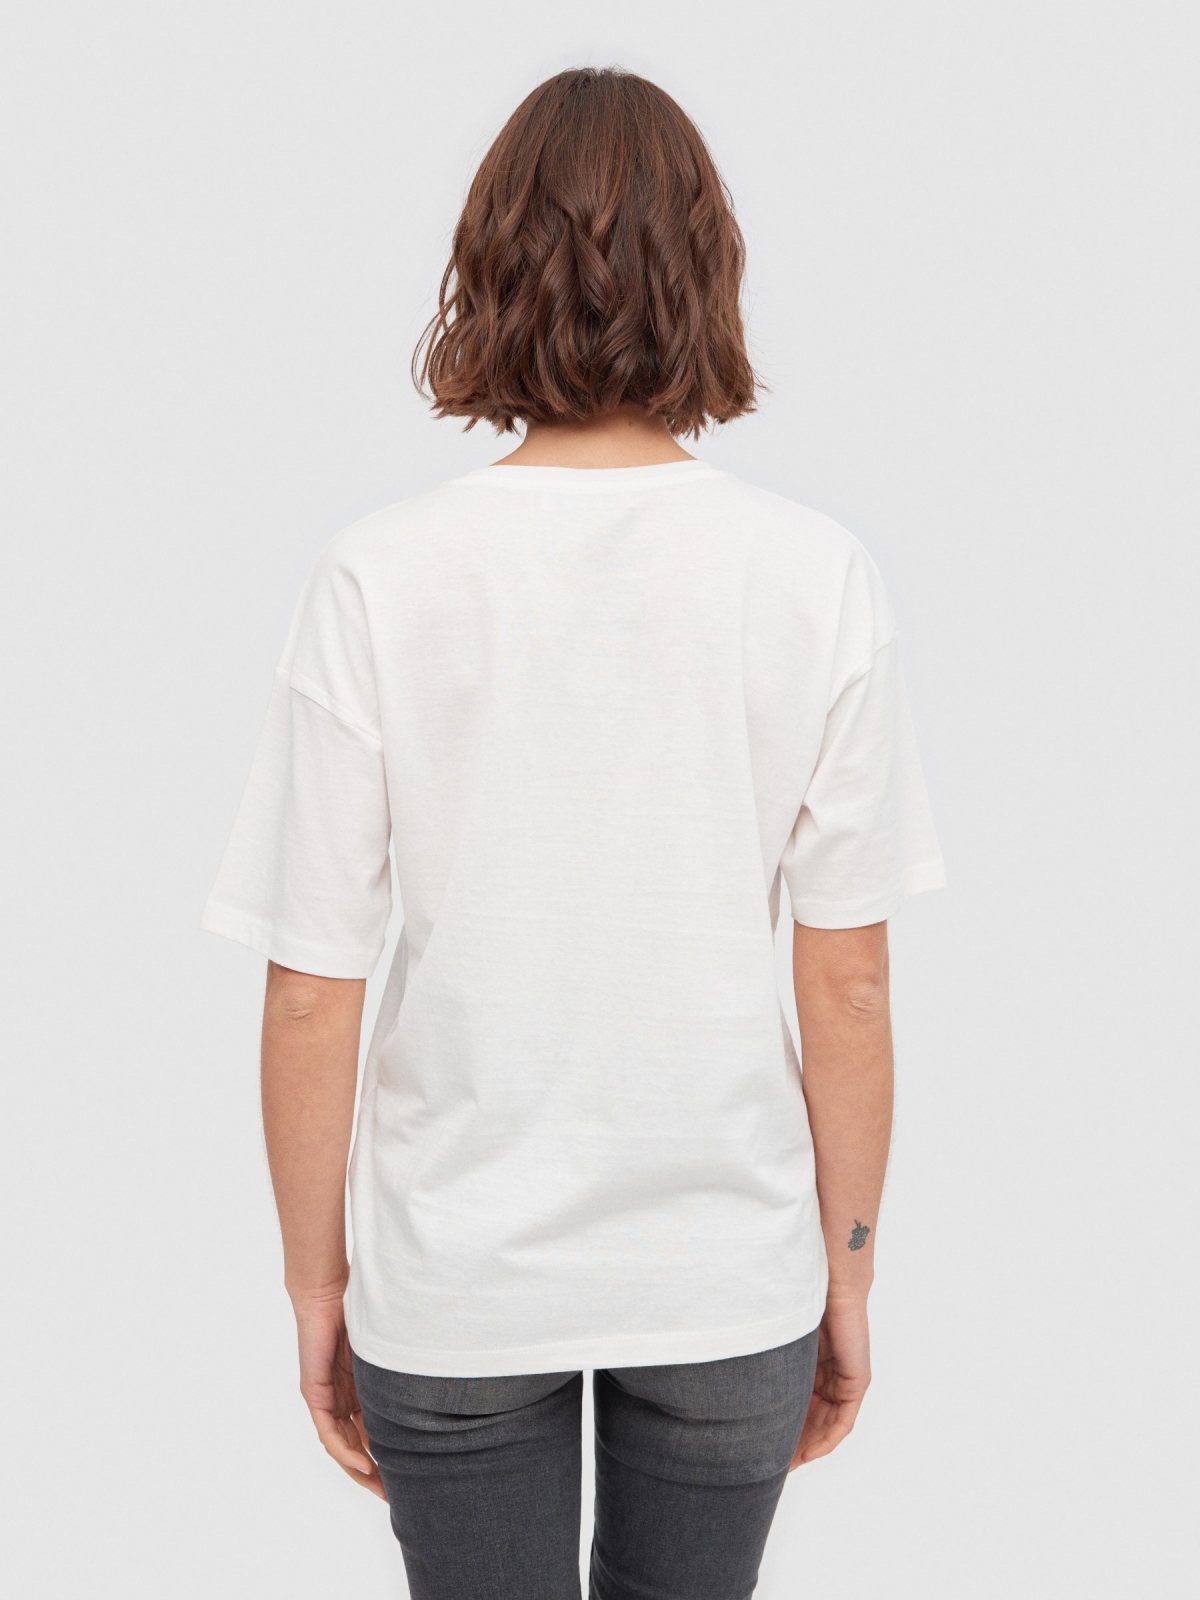 Camiseta oversize Nature blanco roto vista media trasera